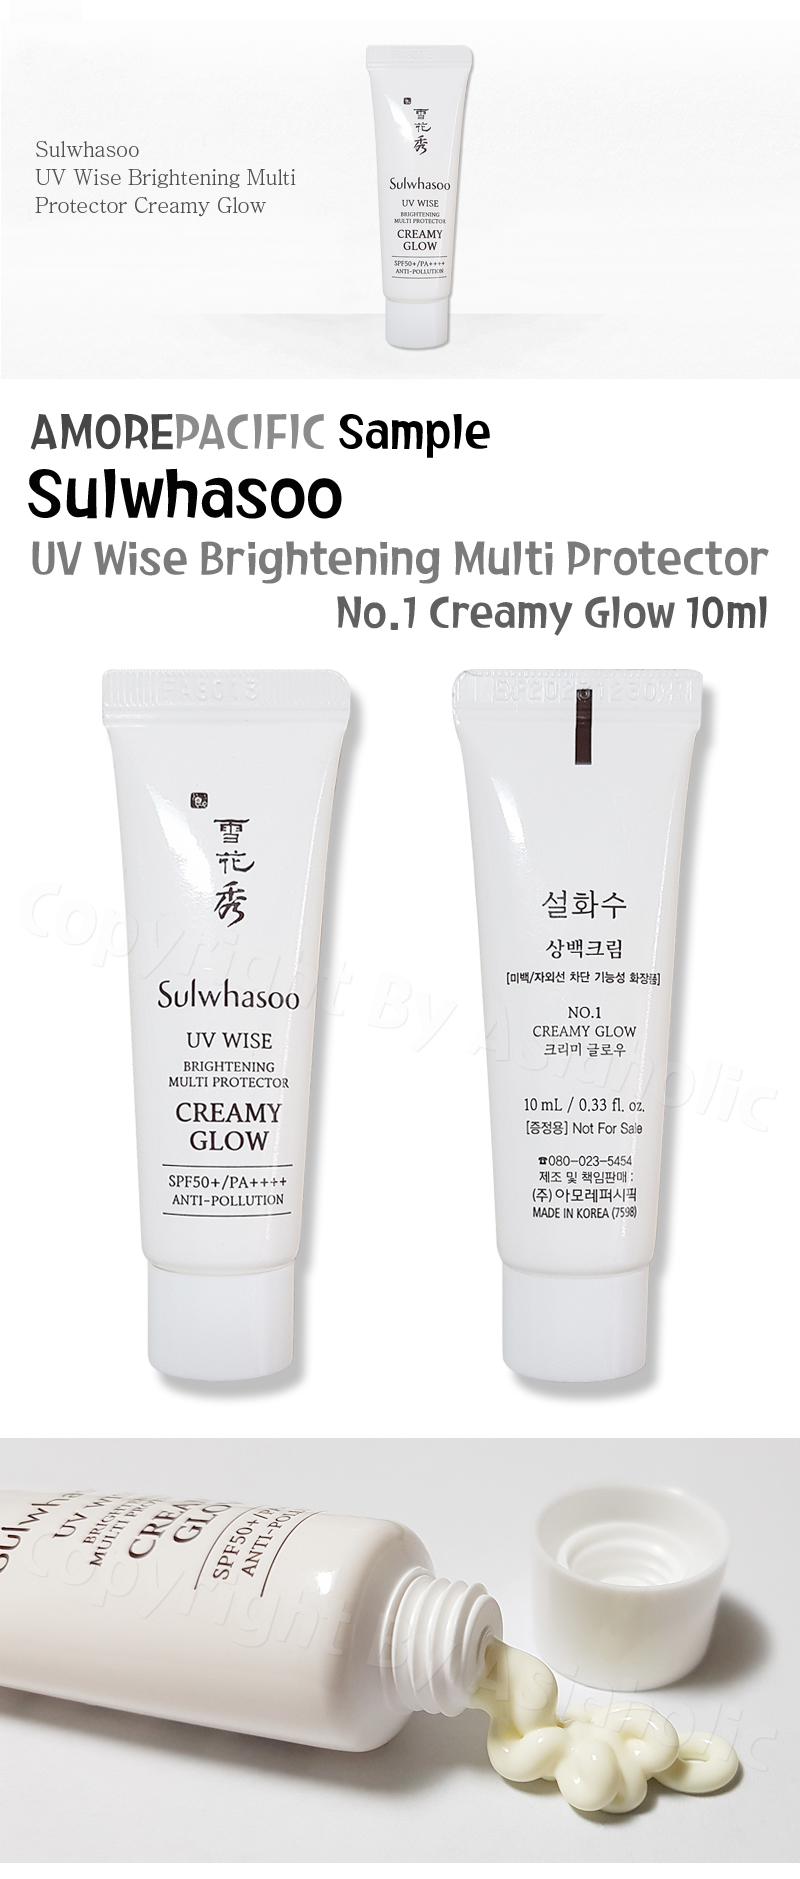 Sulwhasoo UV Wise Brightening Multi Protector No.1 Creamy Glow 10ml x 3pcs Sample Newest Version